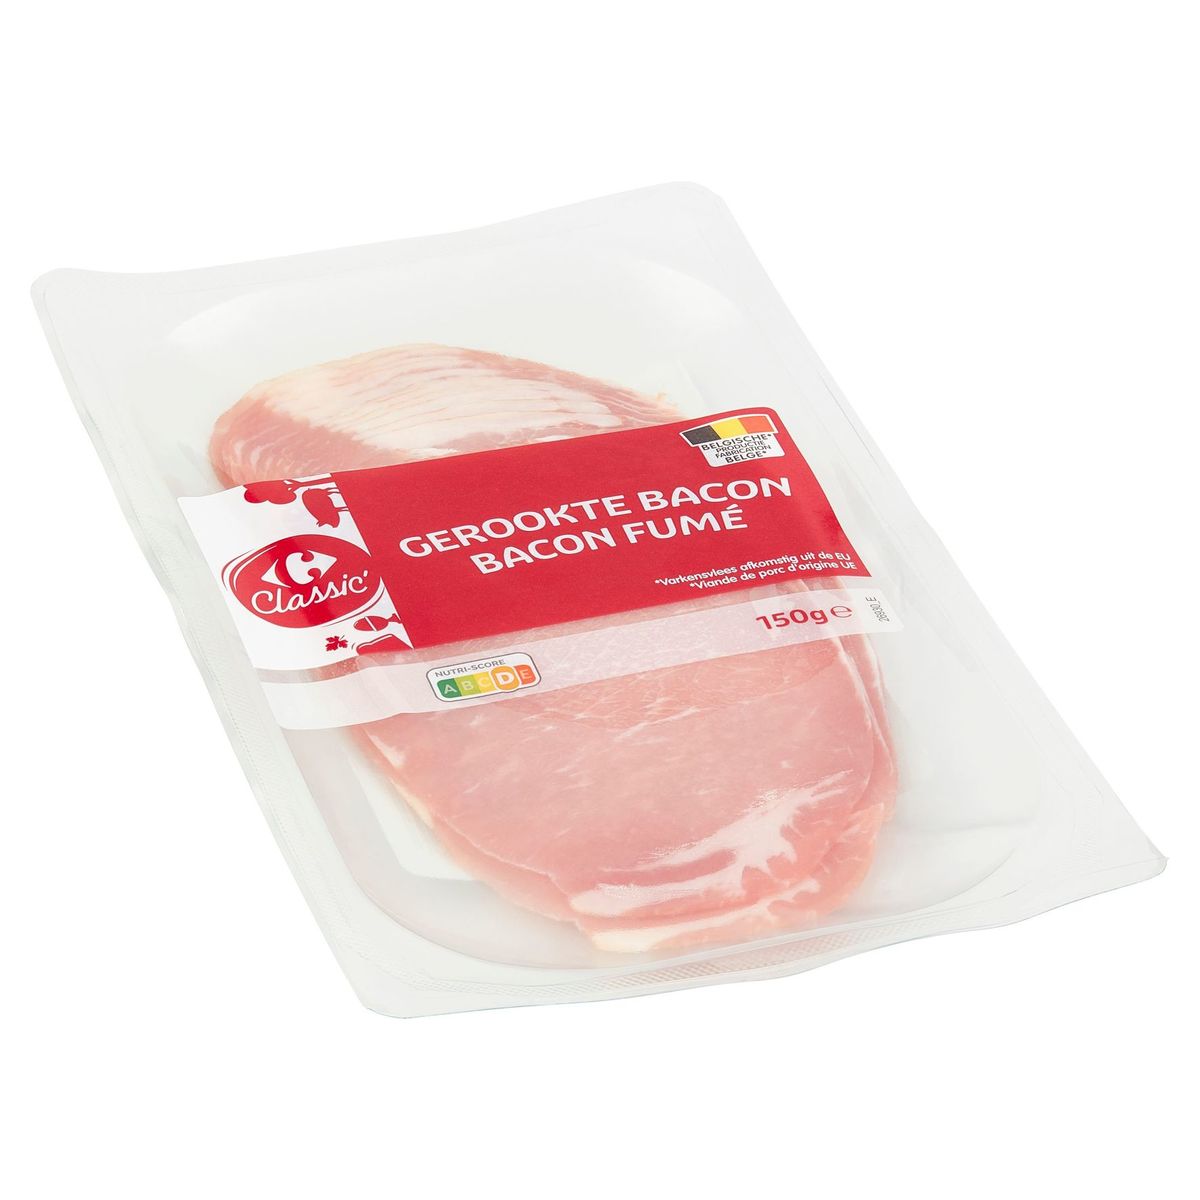 Carrefour Classic' Bacon Fumé 150 g